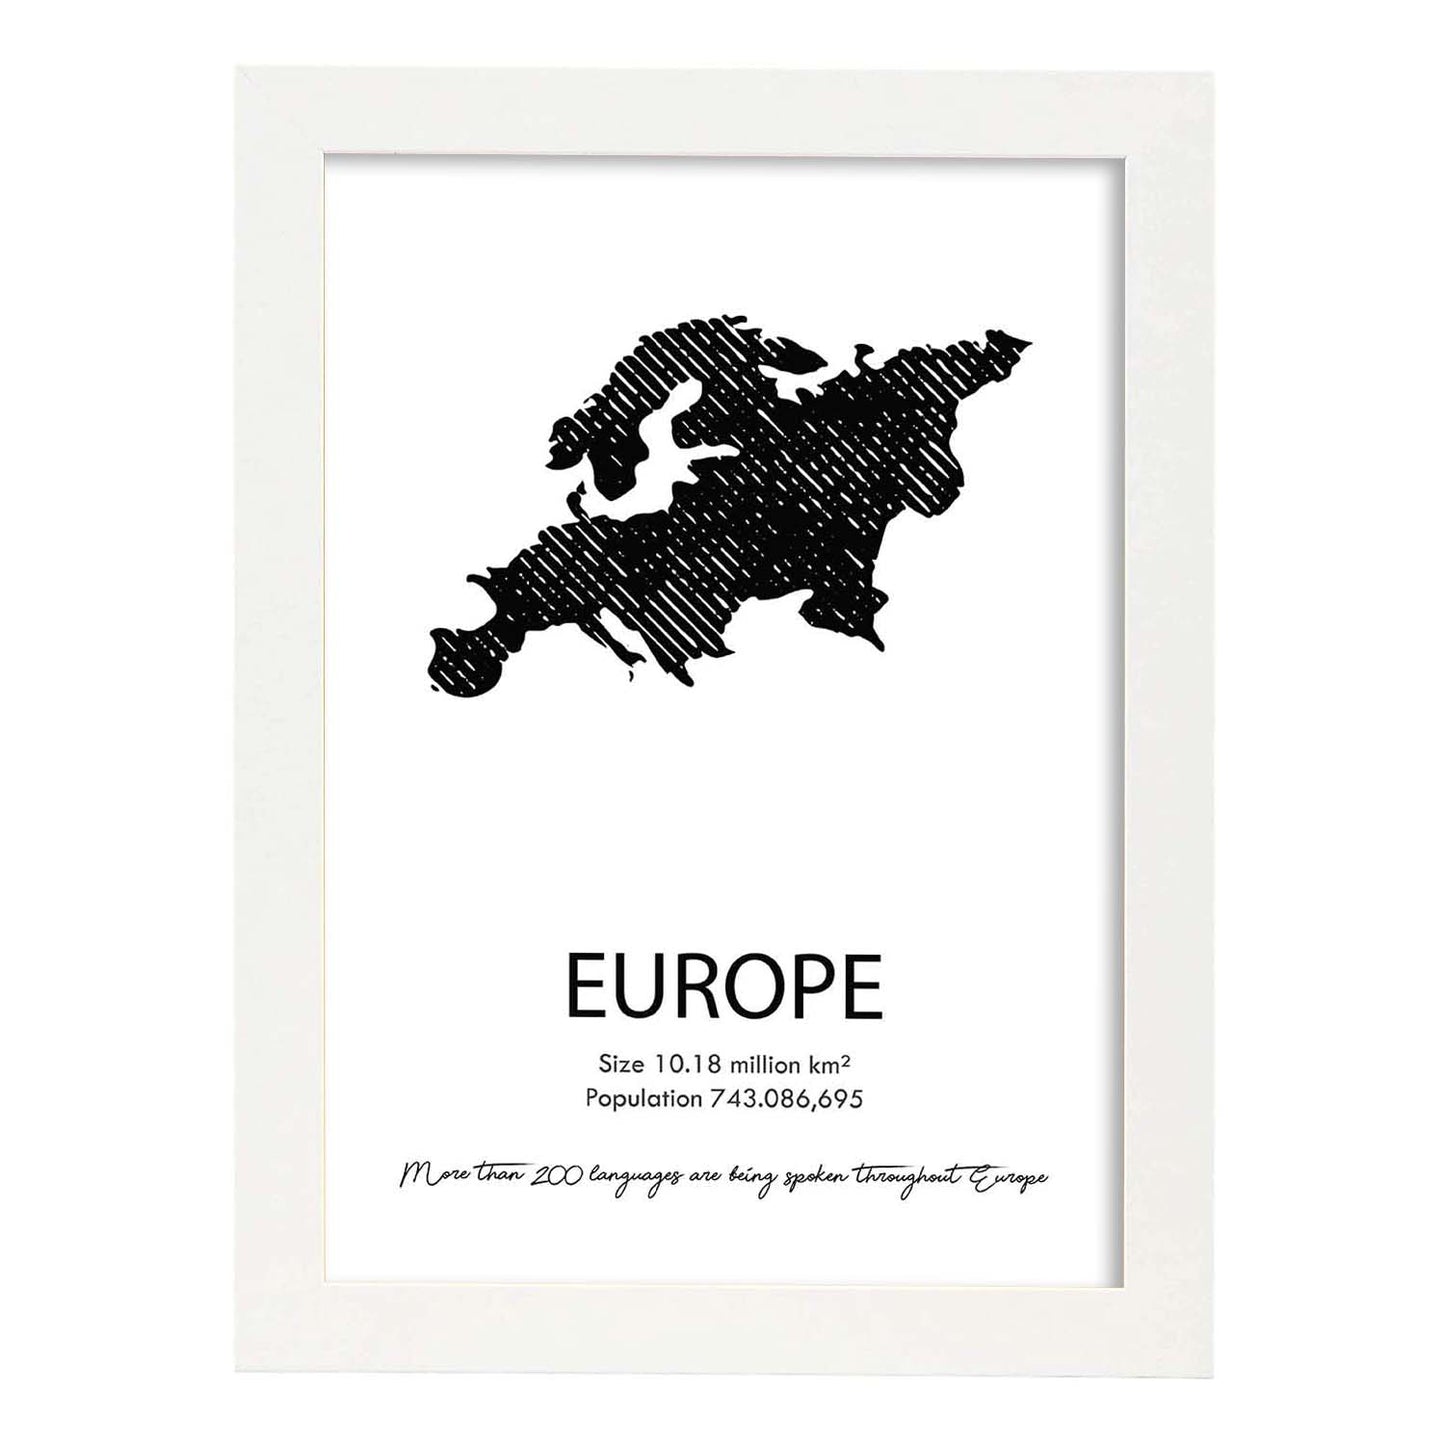 Poster de Europe. Láminas de paises y continentes del mundo.-Artwork-Nacnic-A4-Marco Blanco-Nacnic Estudio SL